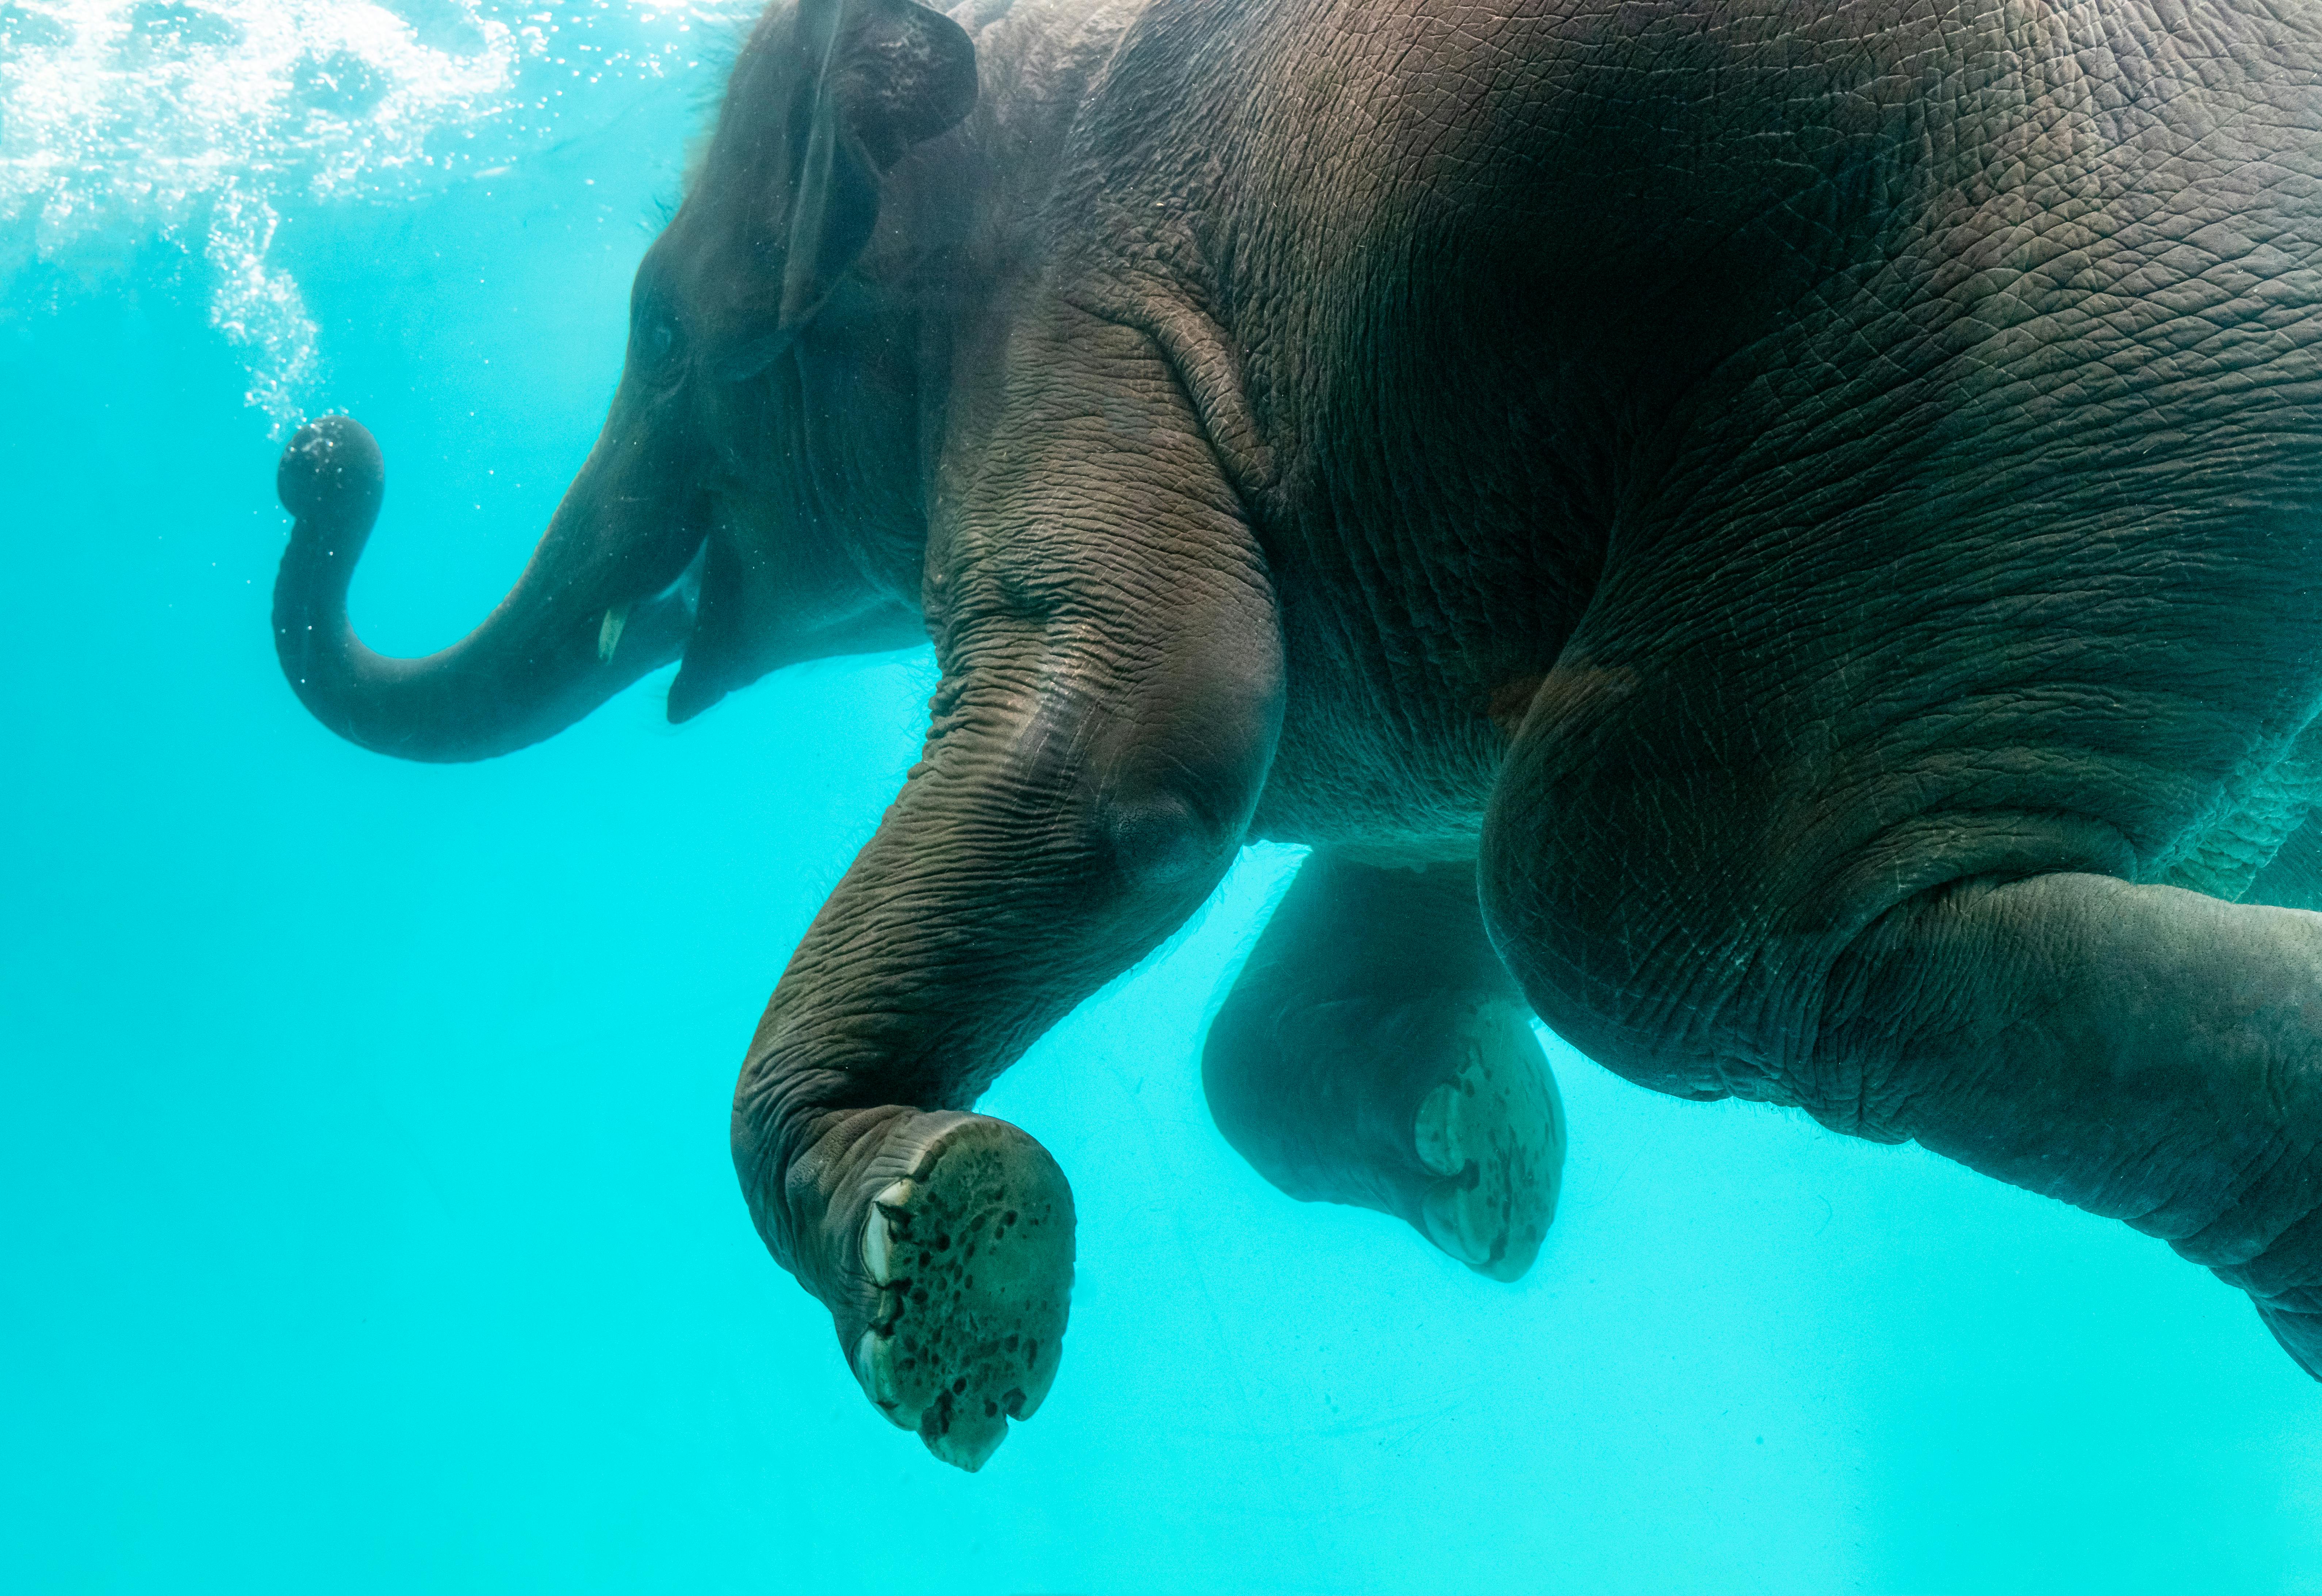 Elephant in pool